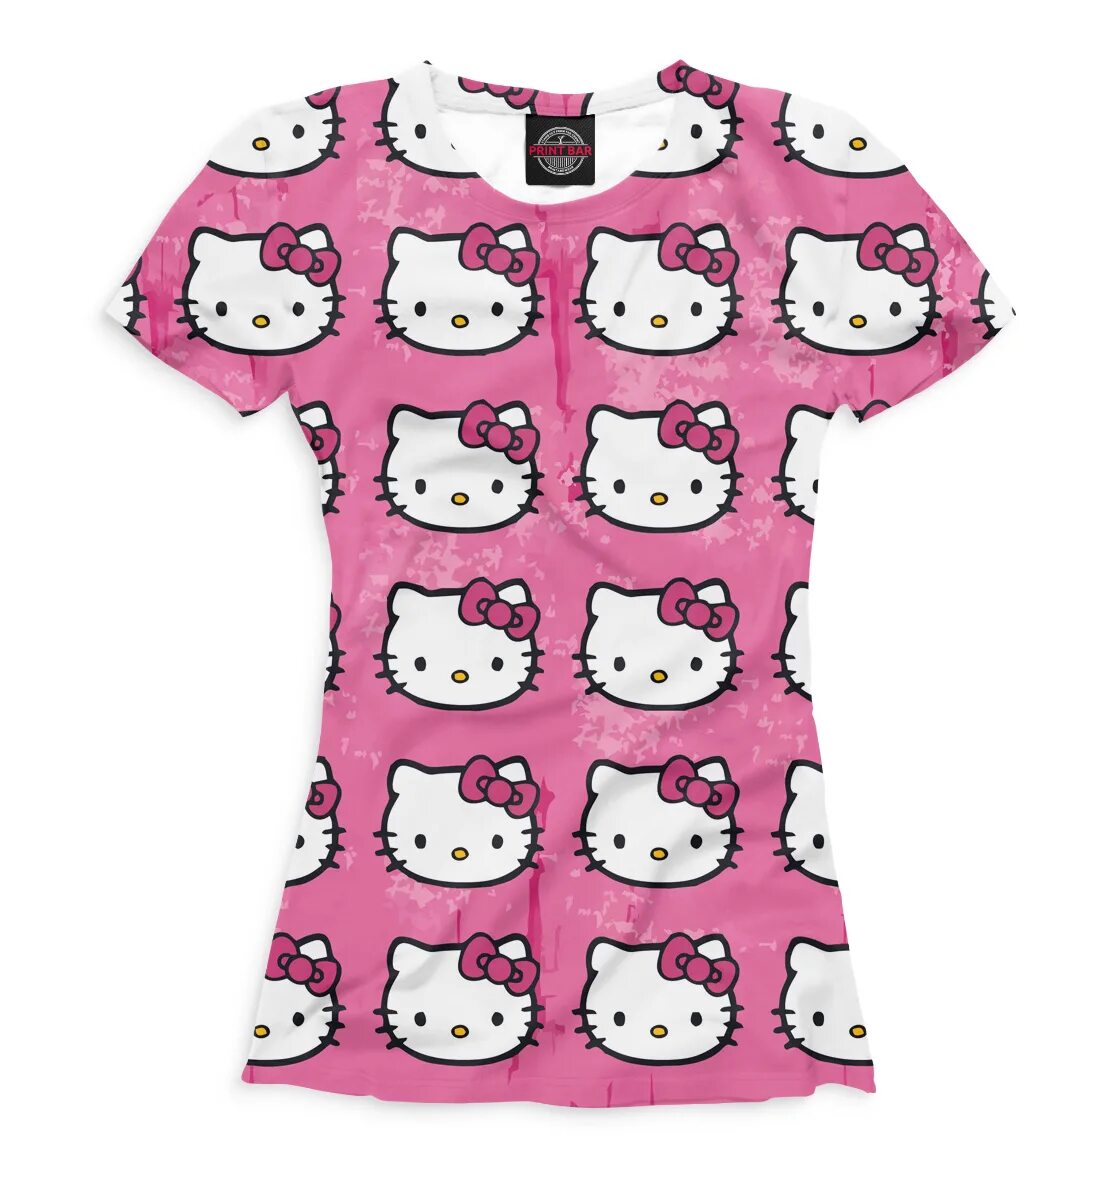 T shirt roblox hello. T-Shirt Хеллоу Китти. Футболка Хелло Китти детская. Детское платье Хелло Китти. Hello Kitty одежда.